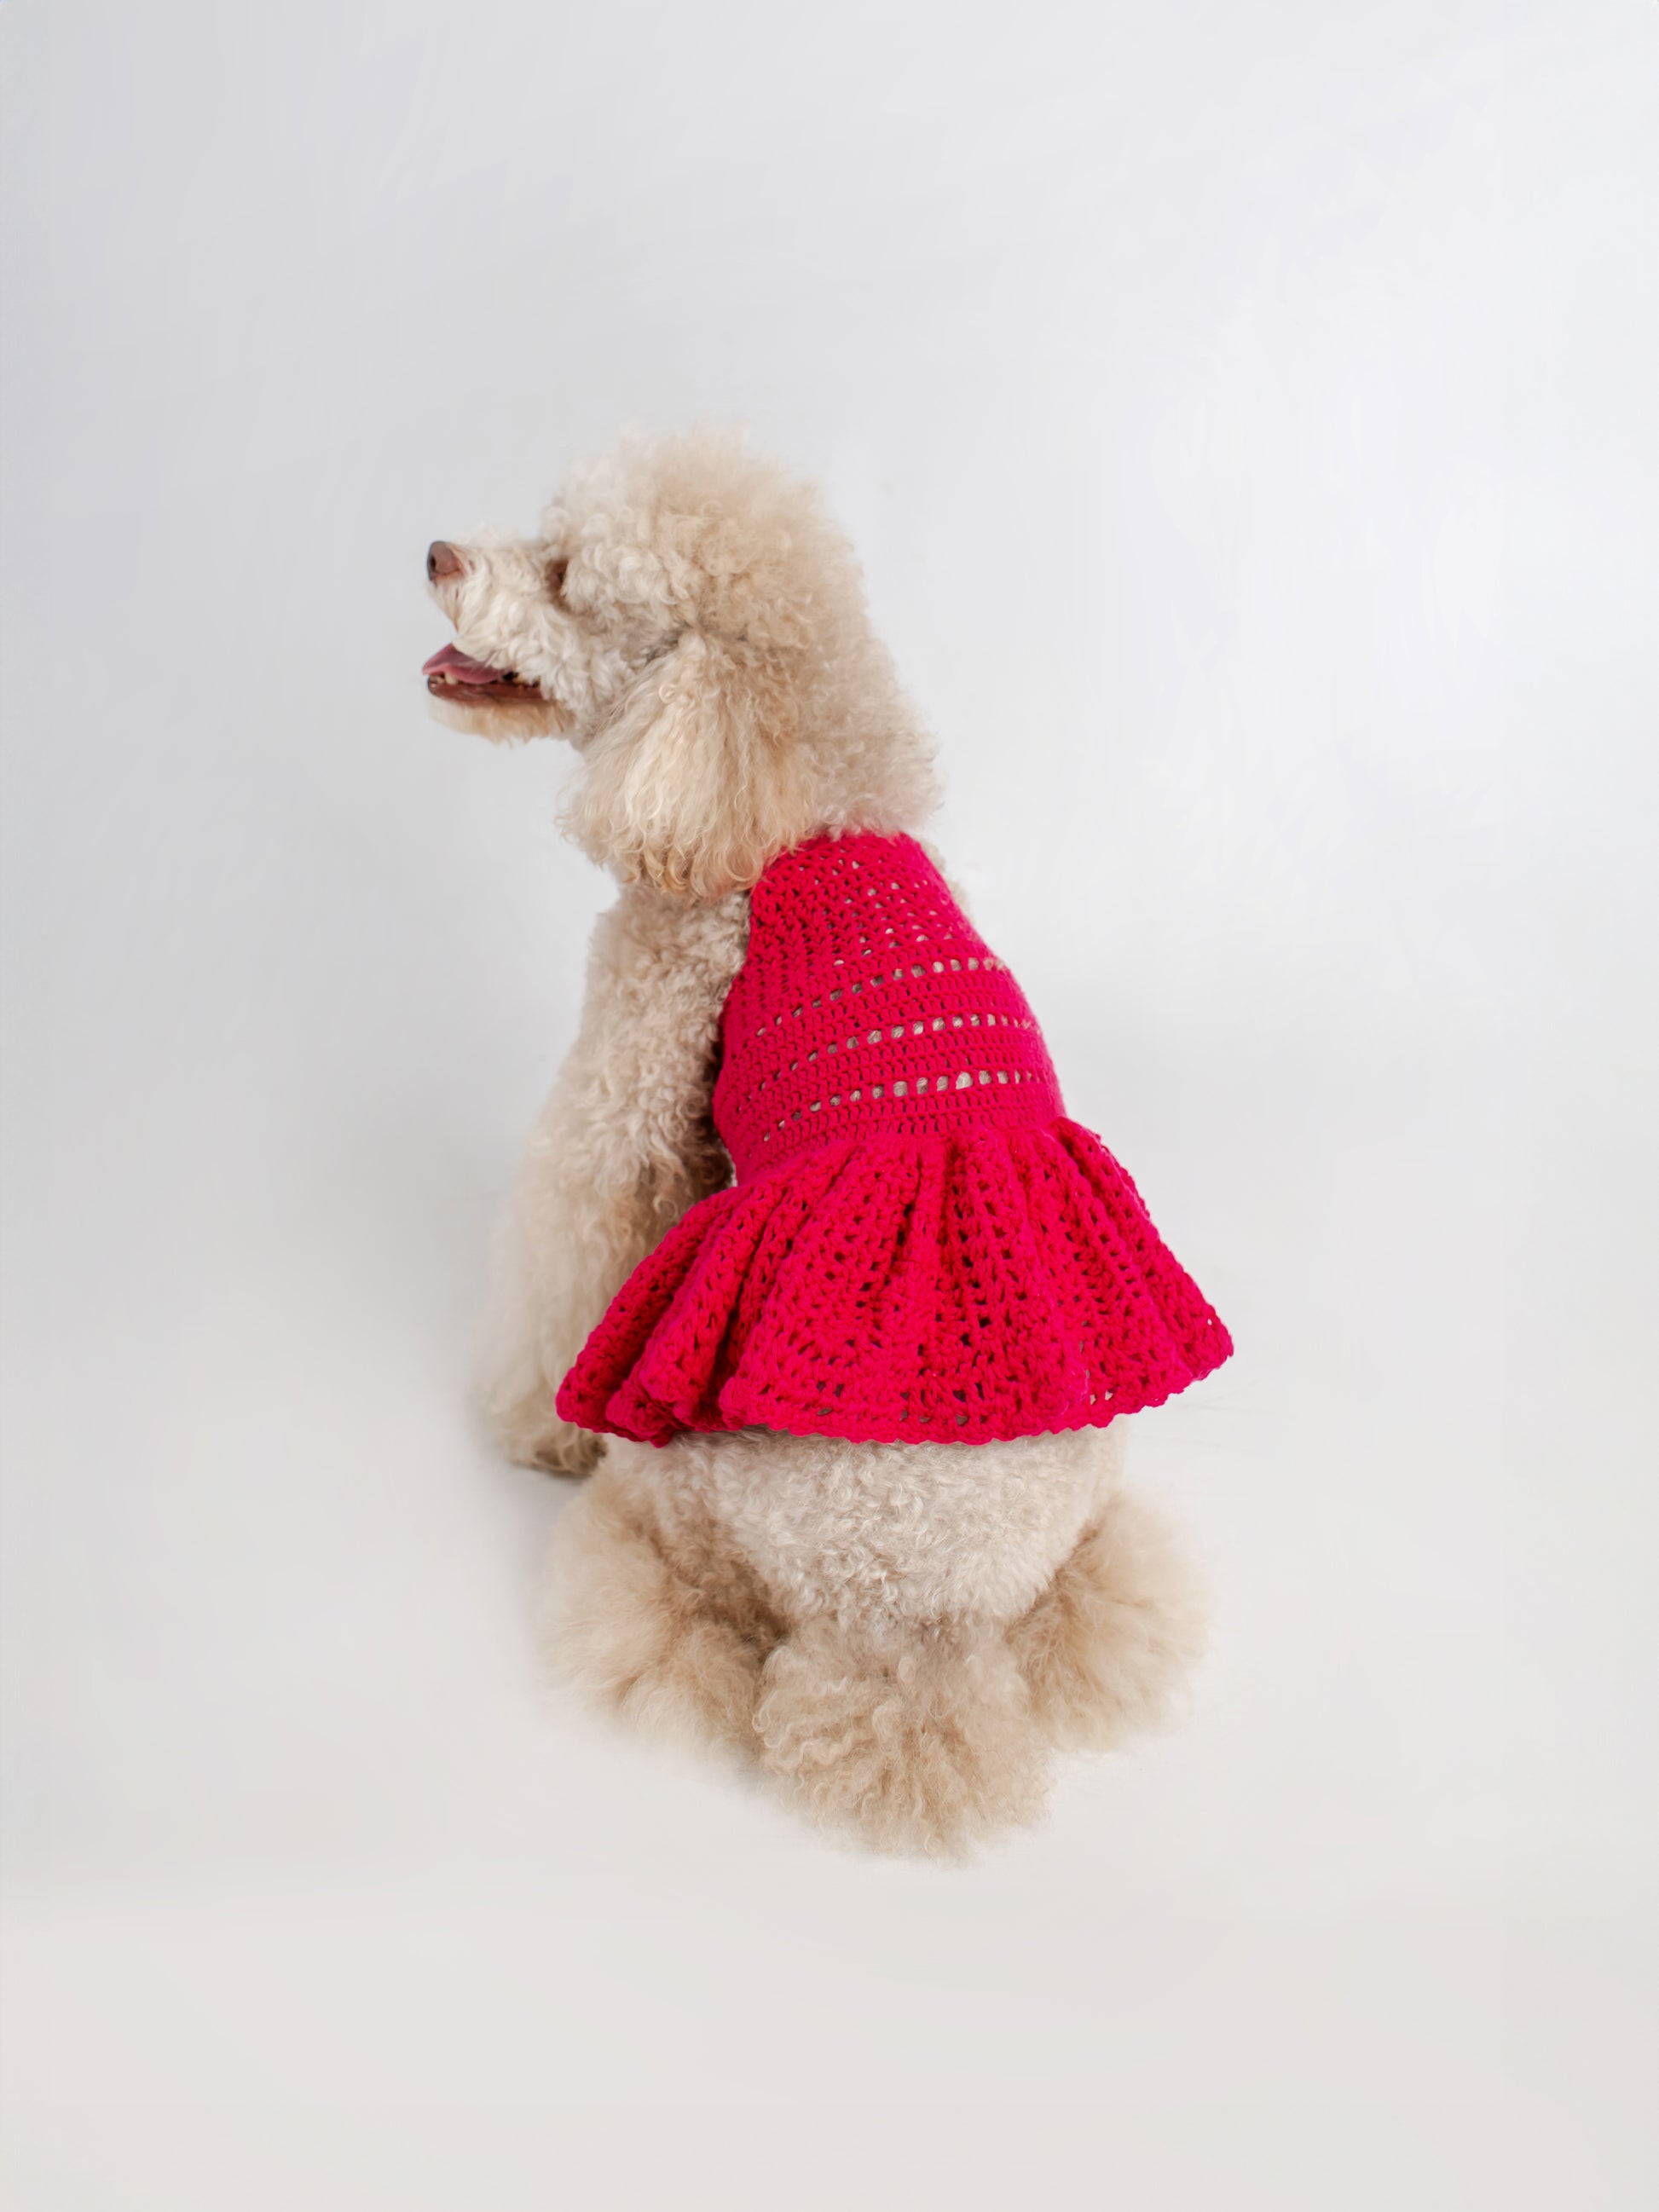 Dog Crochet Dress Handmade in Crochet technique with Soft Peruvian Cotton